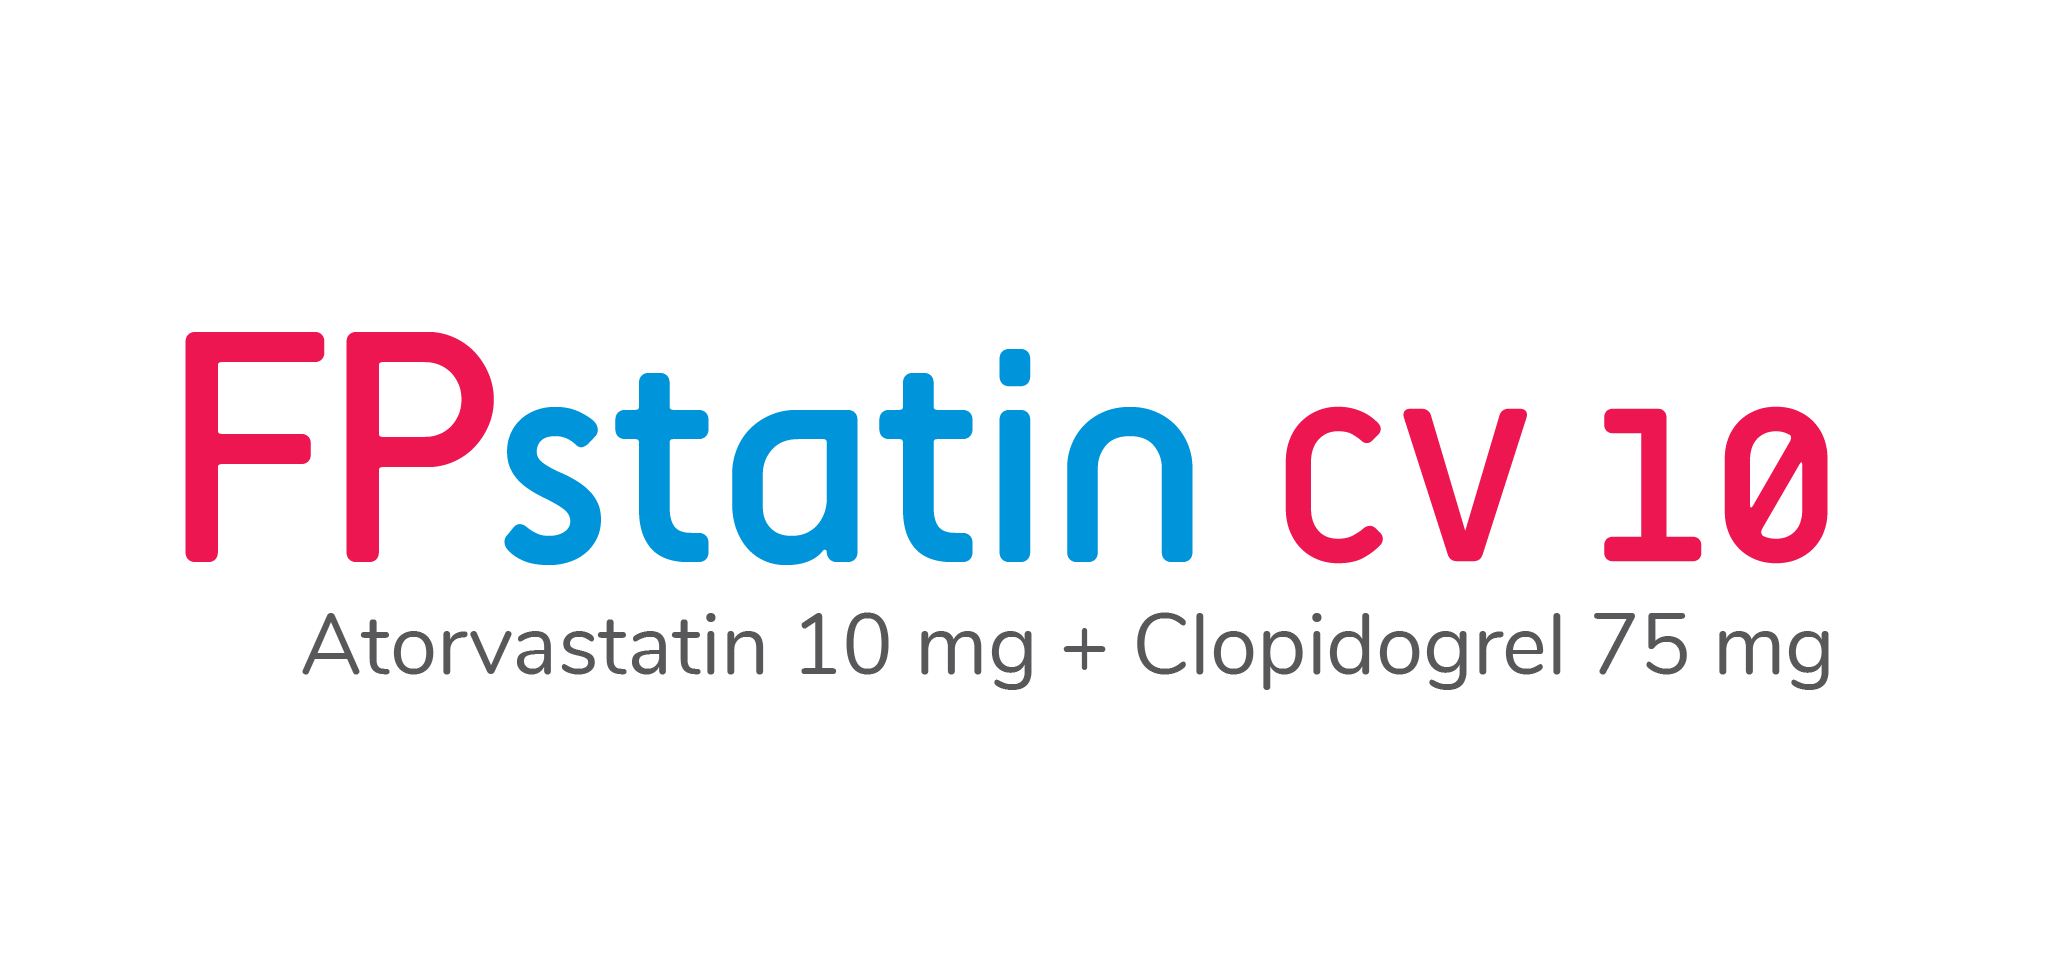 FP Statin CV 10 | Atorvastatin 10 mg + Clopidogrel 75 mg